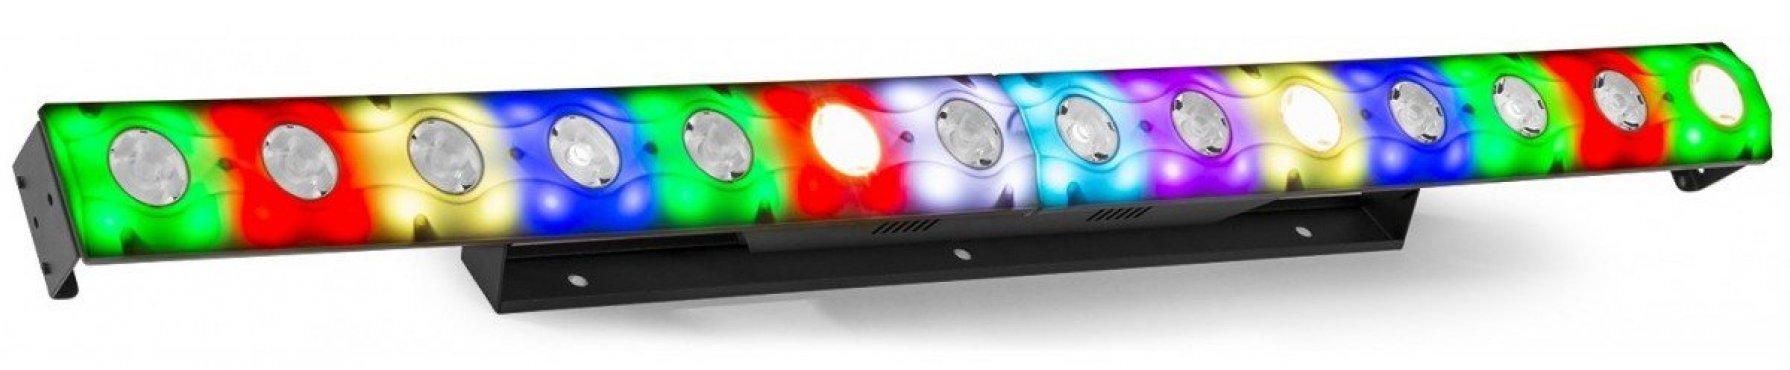 BeamZ Professional LCB14 LED BAR 14x 3W bílá + 56x SMD světelná lišta, Pixel Control